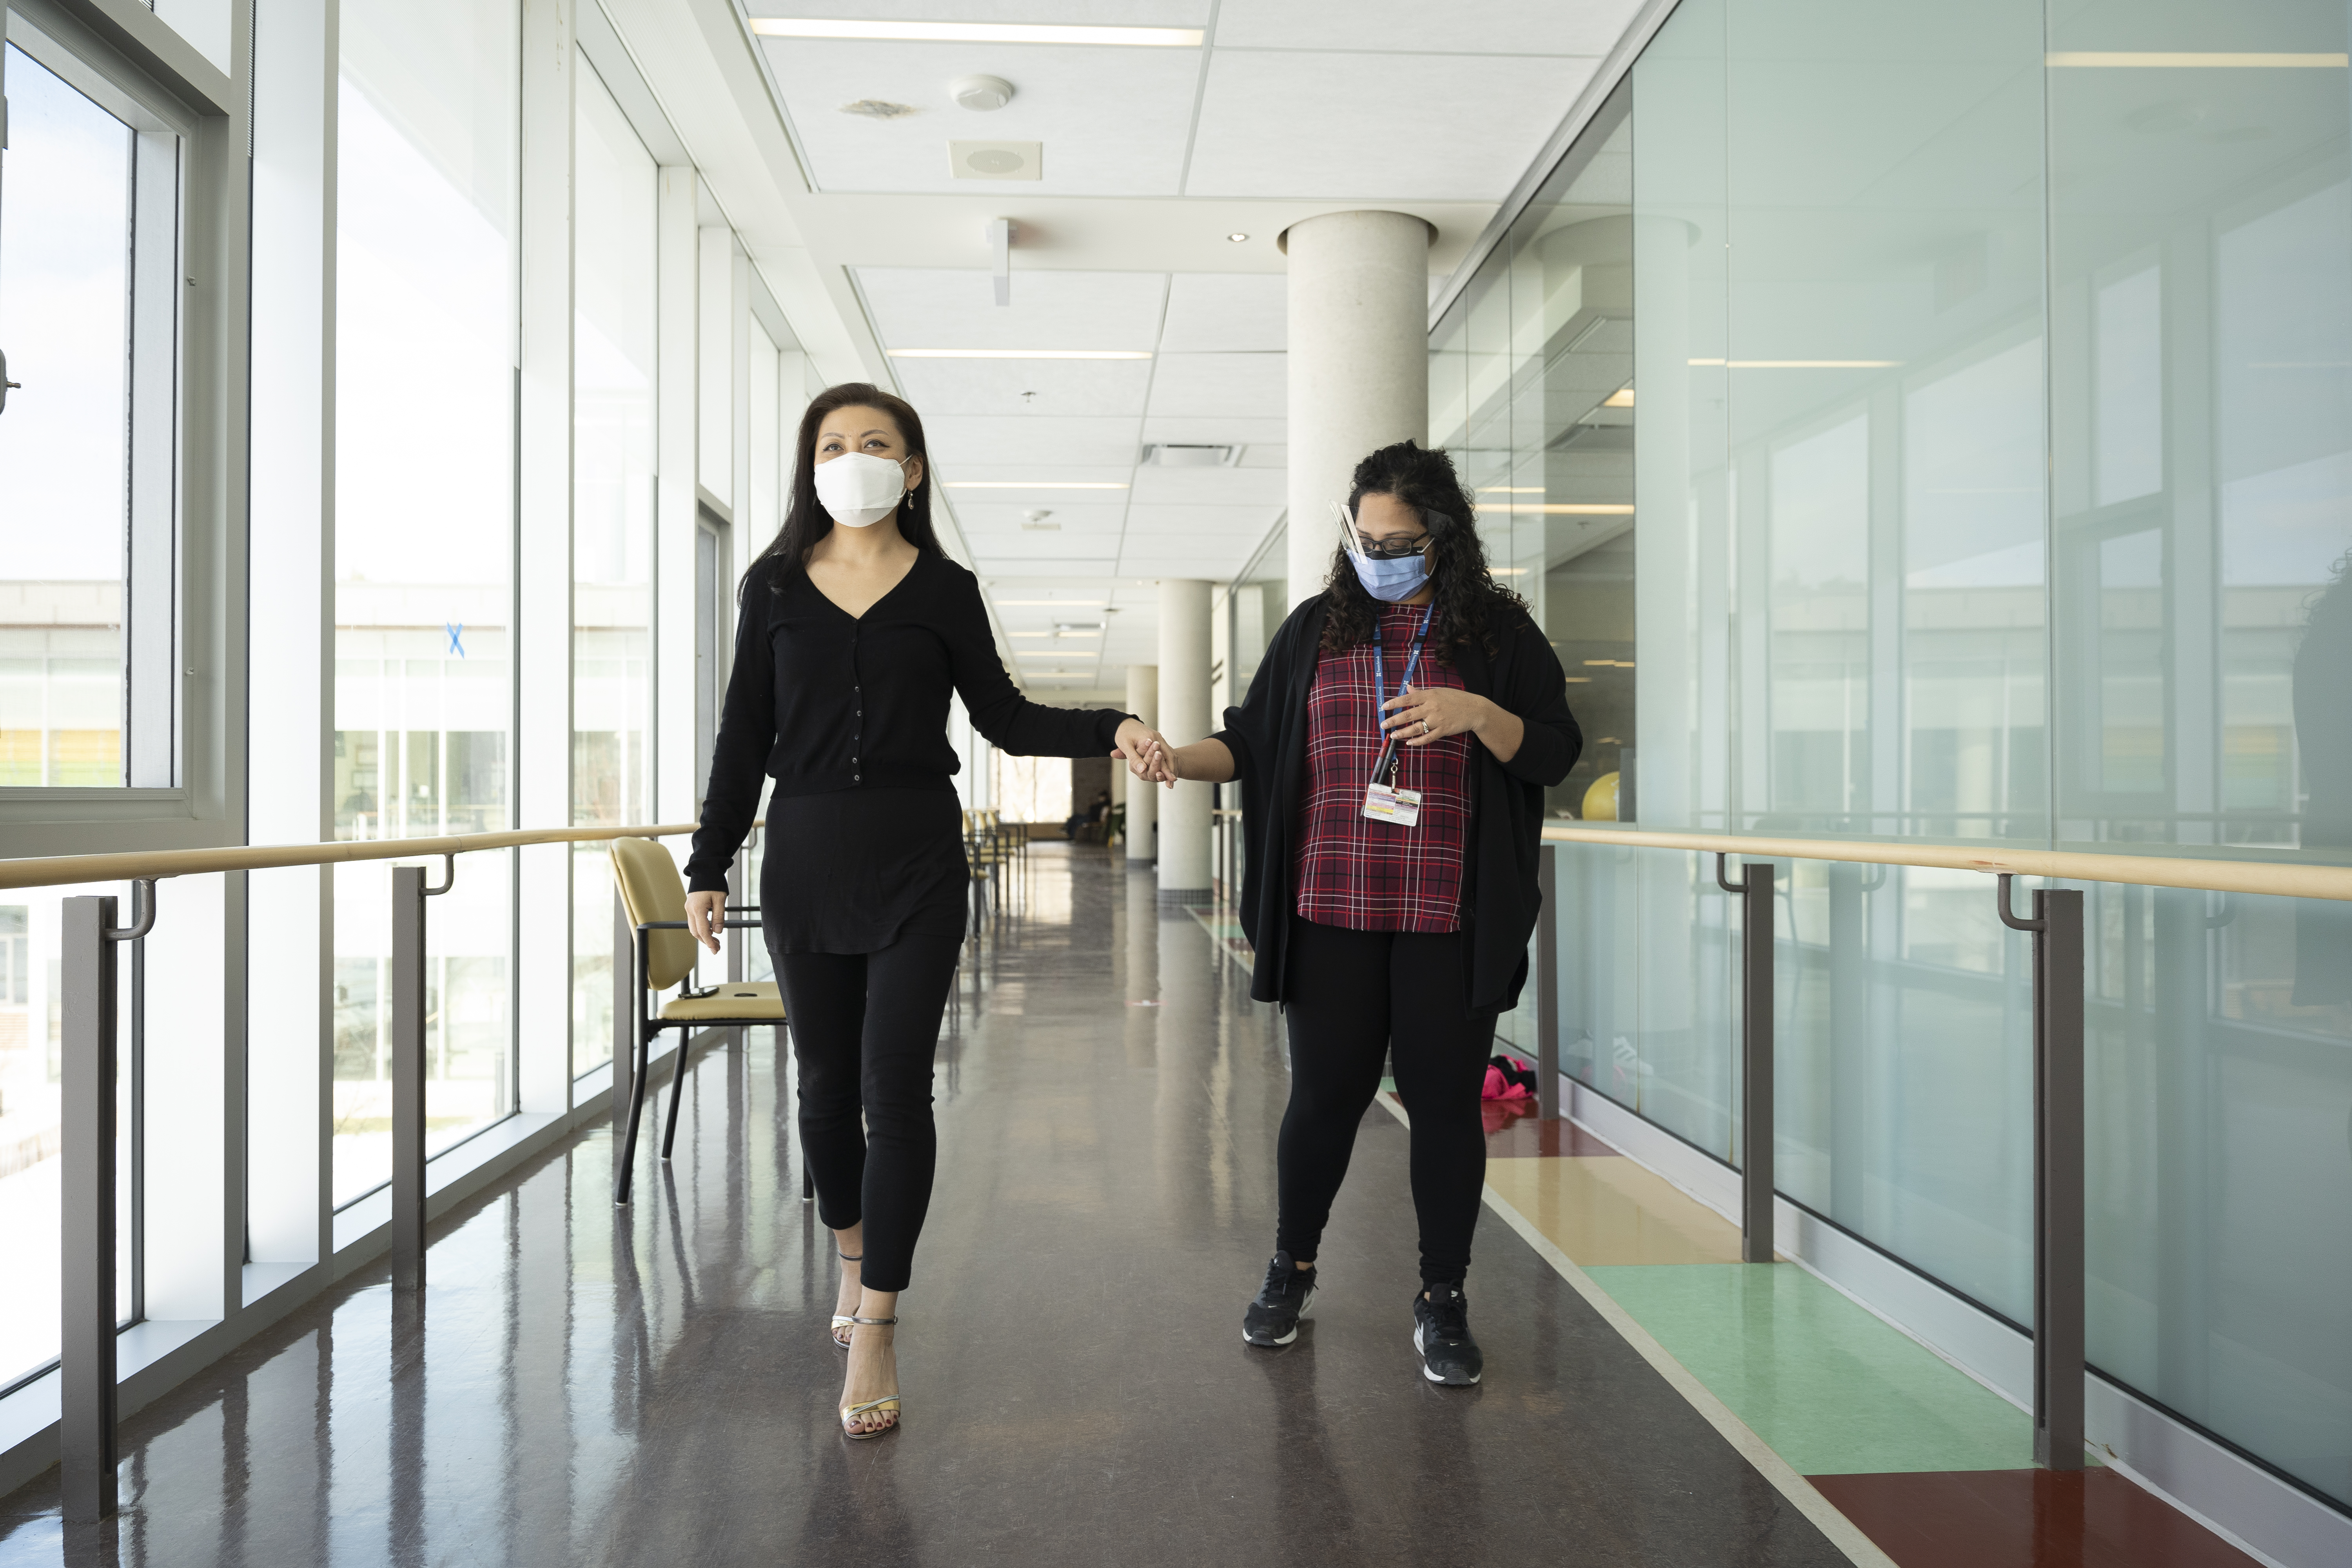 Jenny Shin walks a hospital hallway in high heels